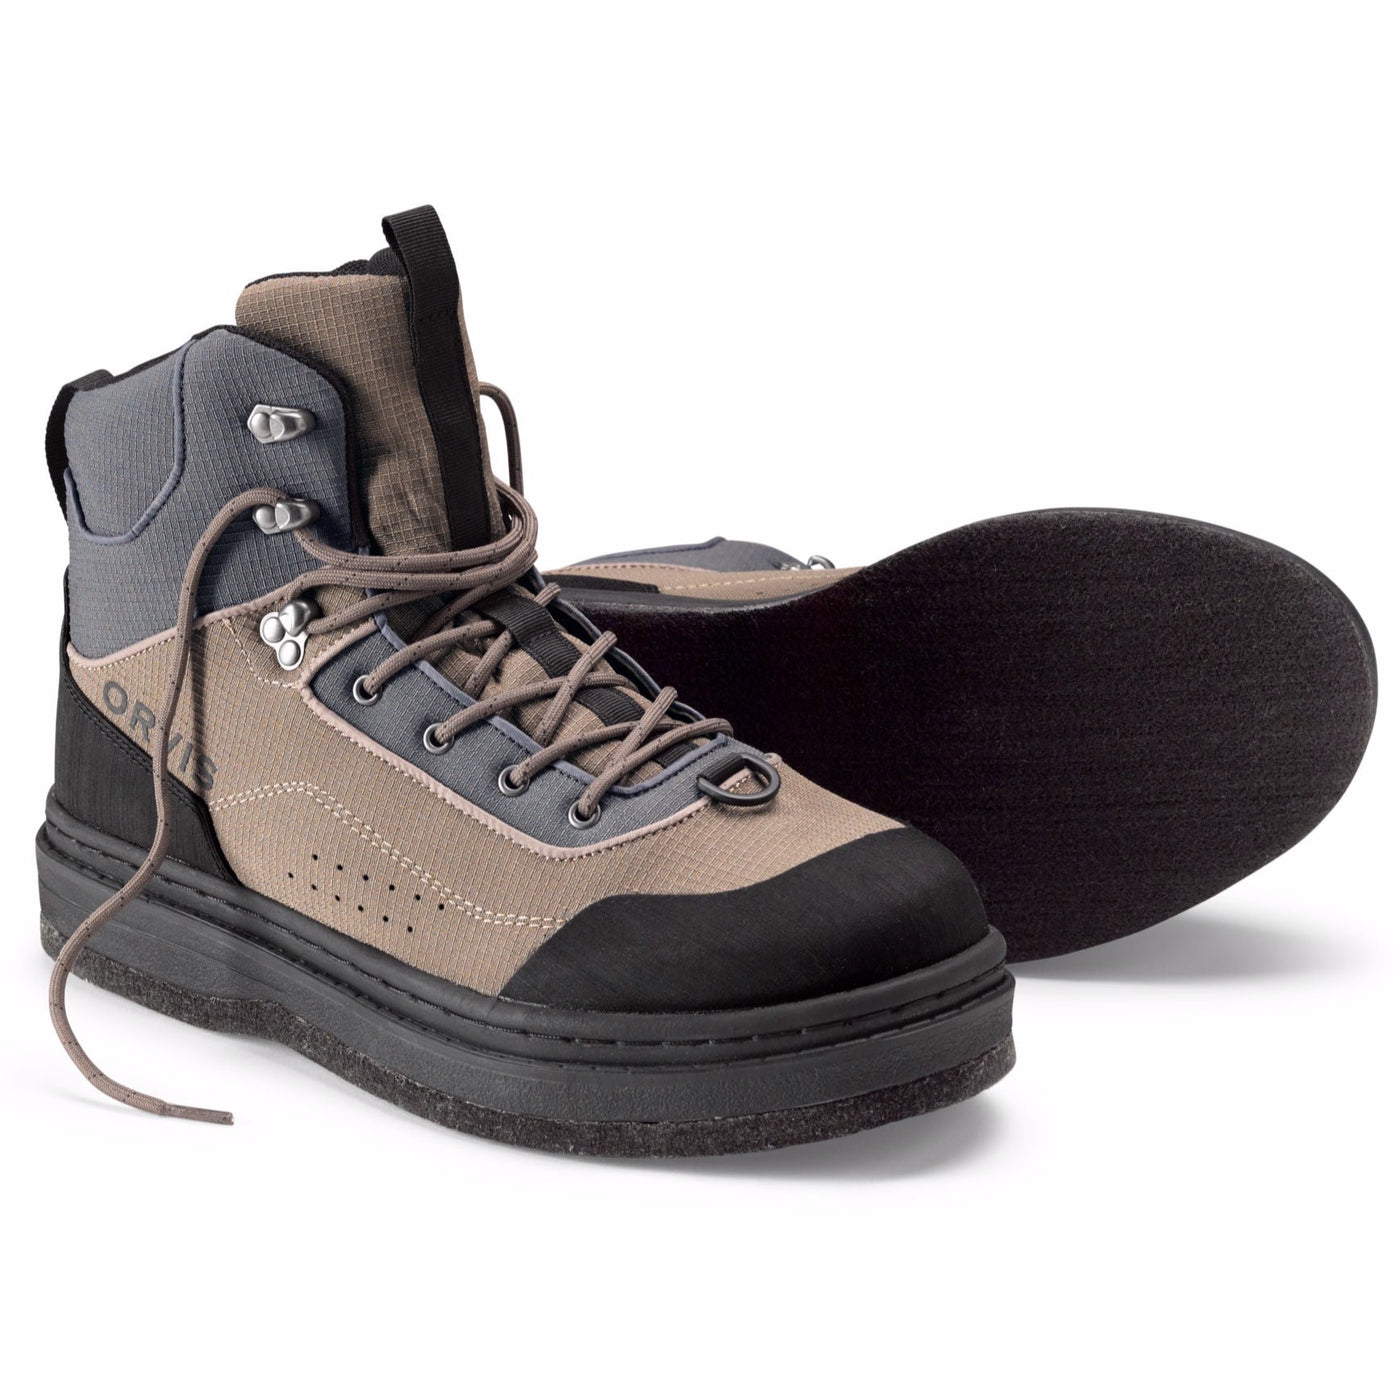 Orvis Encounter Wading Boots - Felt 12